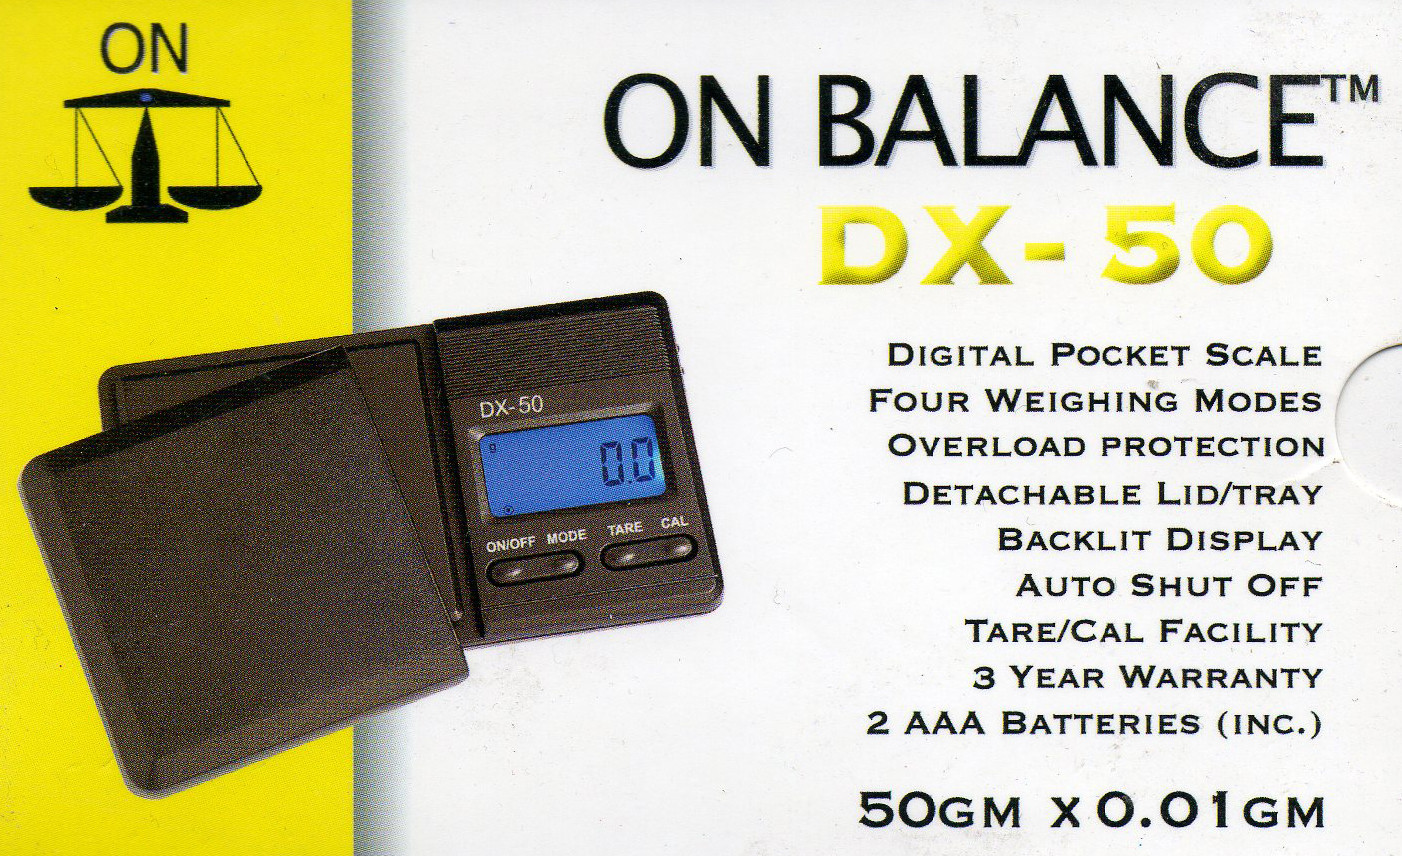 ON BALANCE DX50